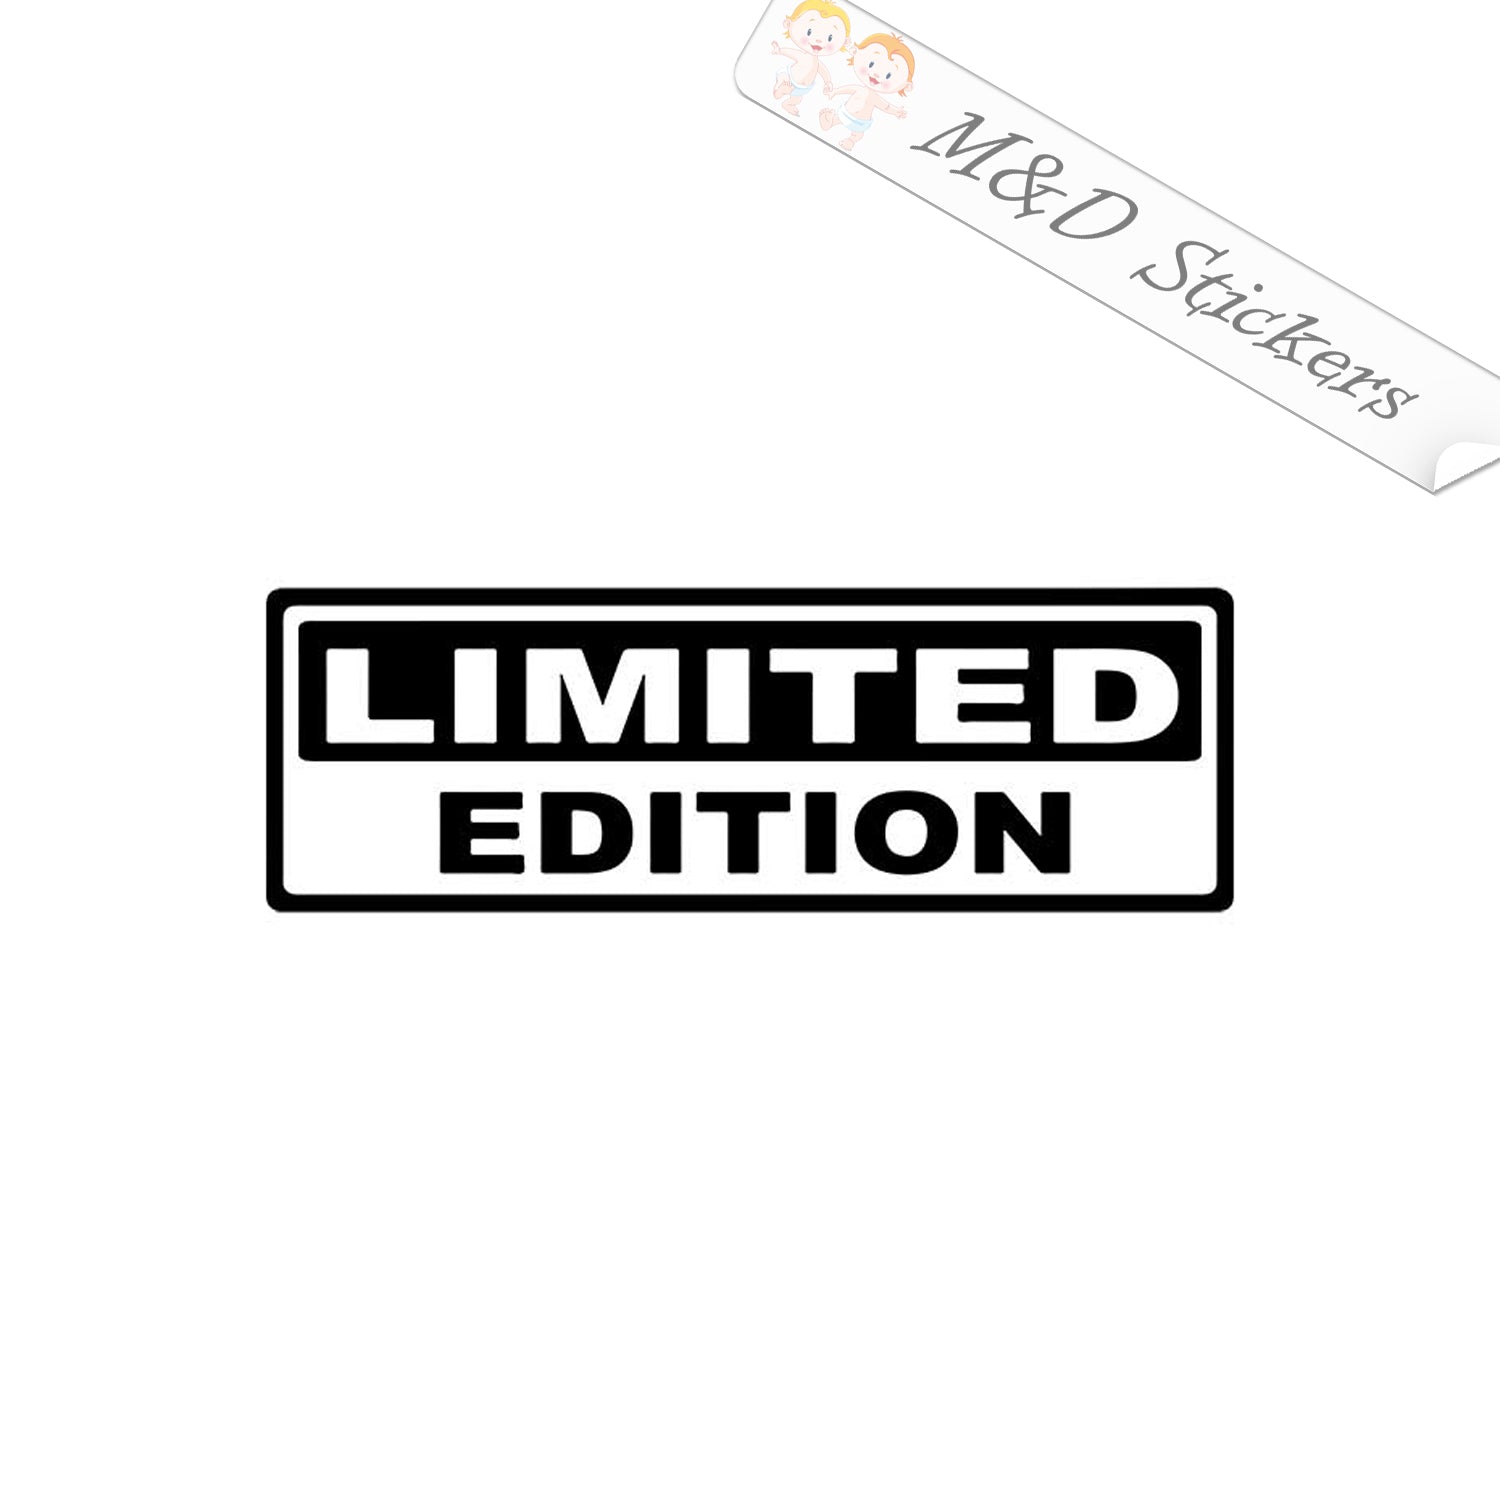 Effectiviteit Versterker Kapel 2x Limited Edition Vinyl Decal Sticker Different colors & size for Car –  M&D Stickers